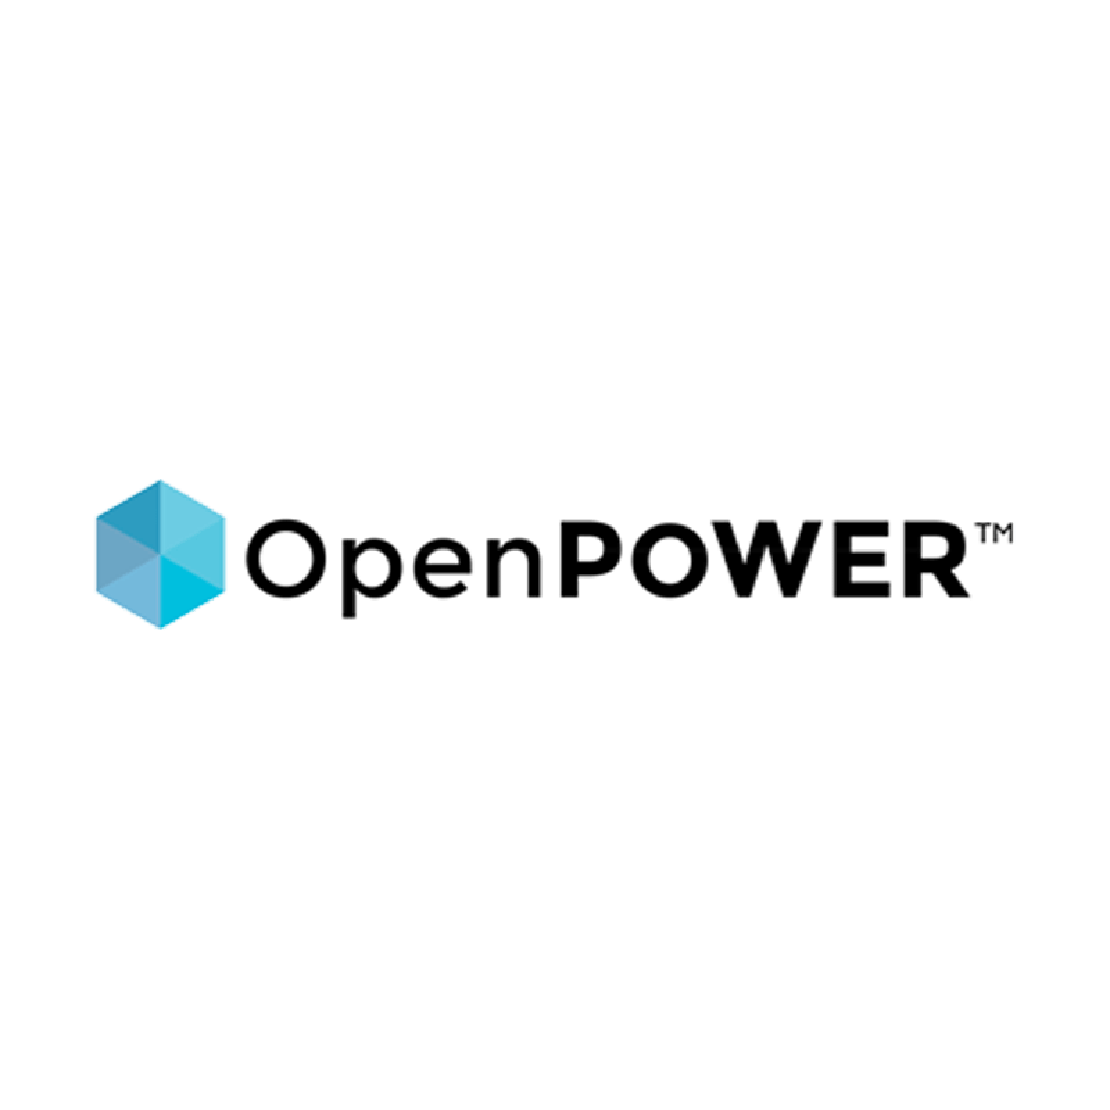 OpenPOWER **foundation members**